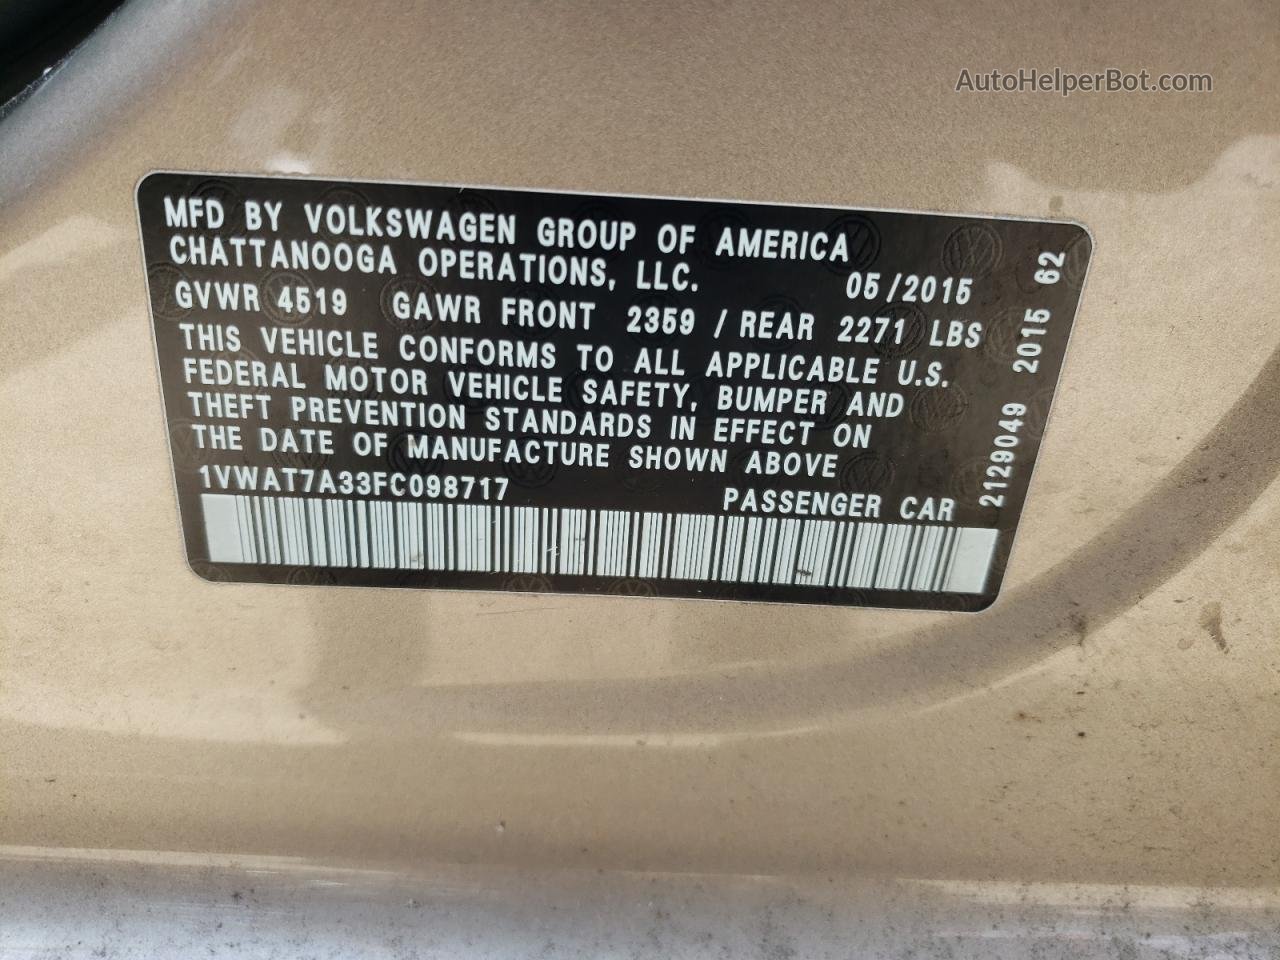 2015 Volkswagen Passat S Tan vin: 1VWAT7A33FC098717